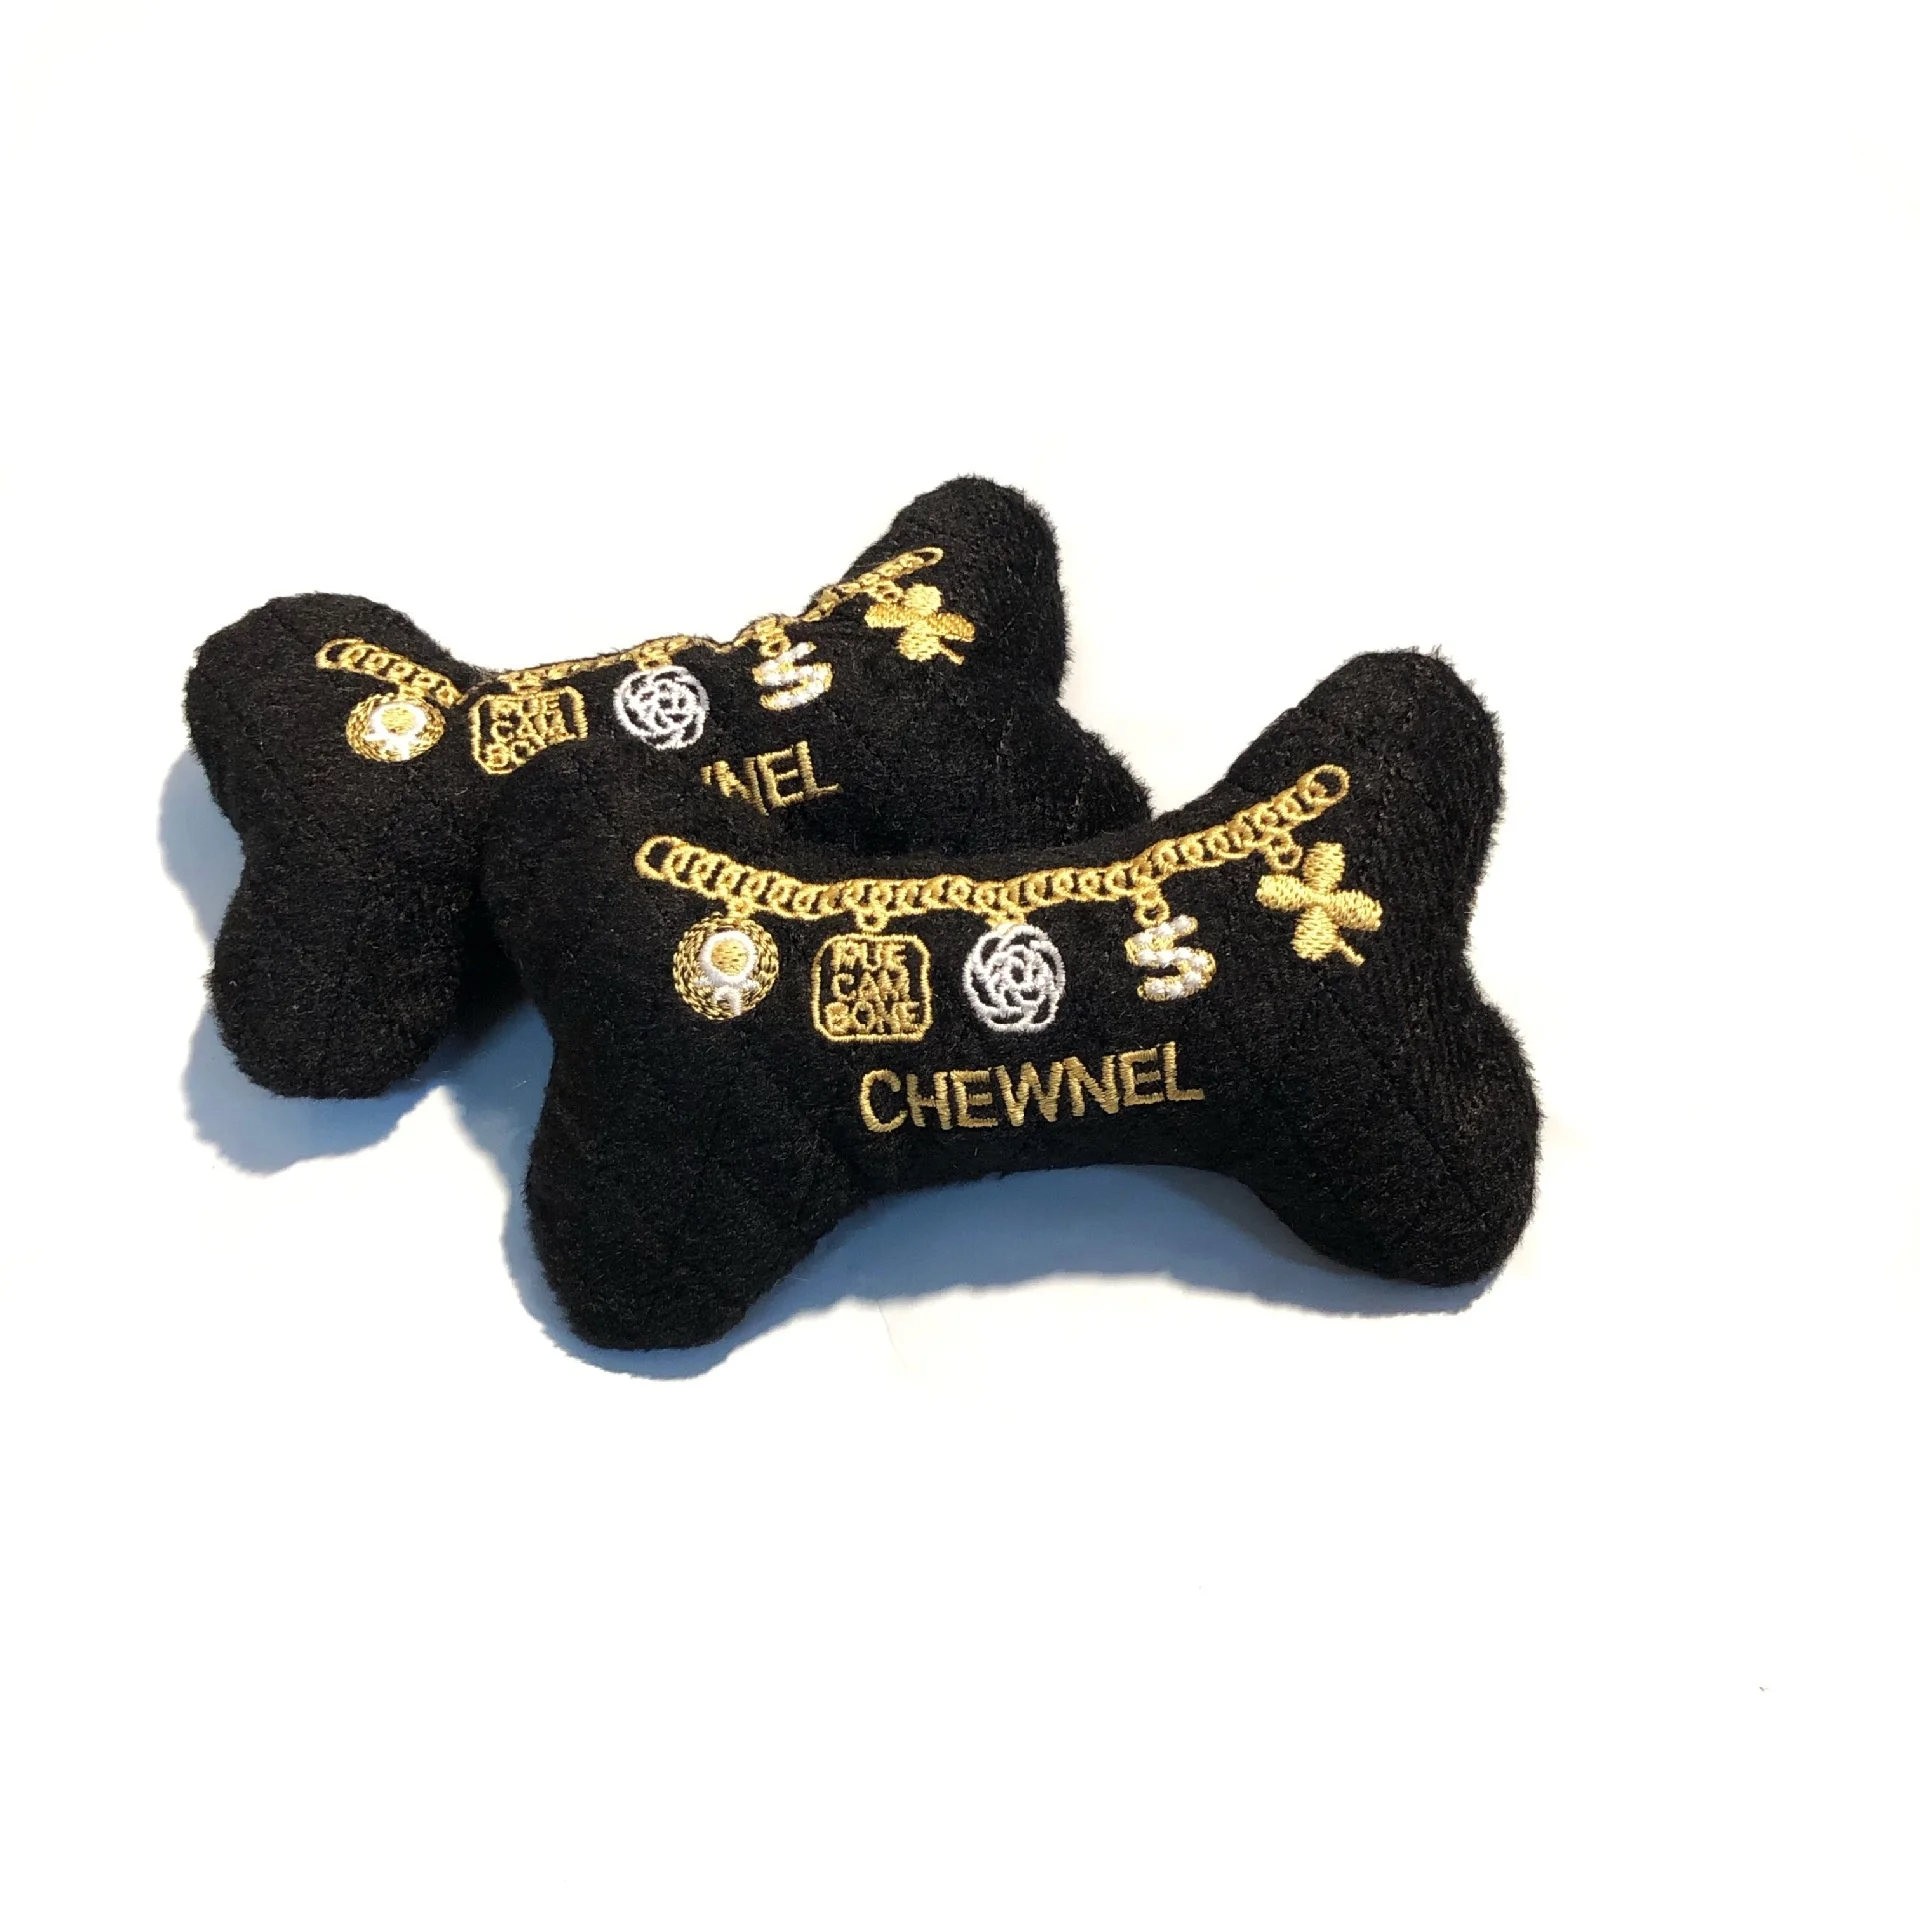 Pet Supplies : Chewy Vuitton Dog Toy : Dog Diggin Designs Runway Pup  Collection  Unique Squeaky Plush Dog Toys – Prêt-à-Porter Dog Bones, Balls  & More 